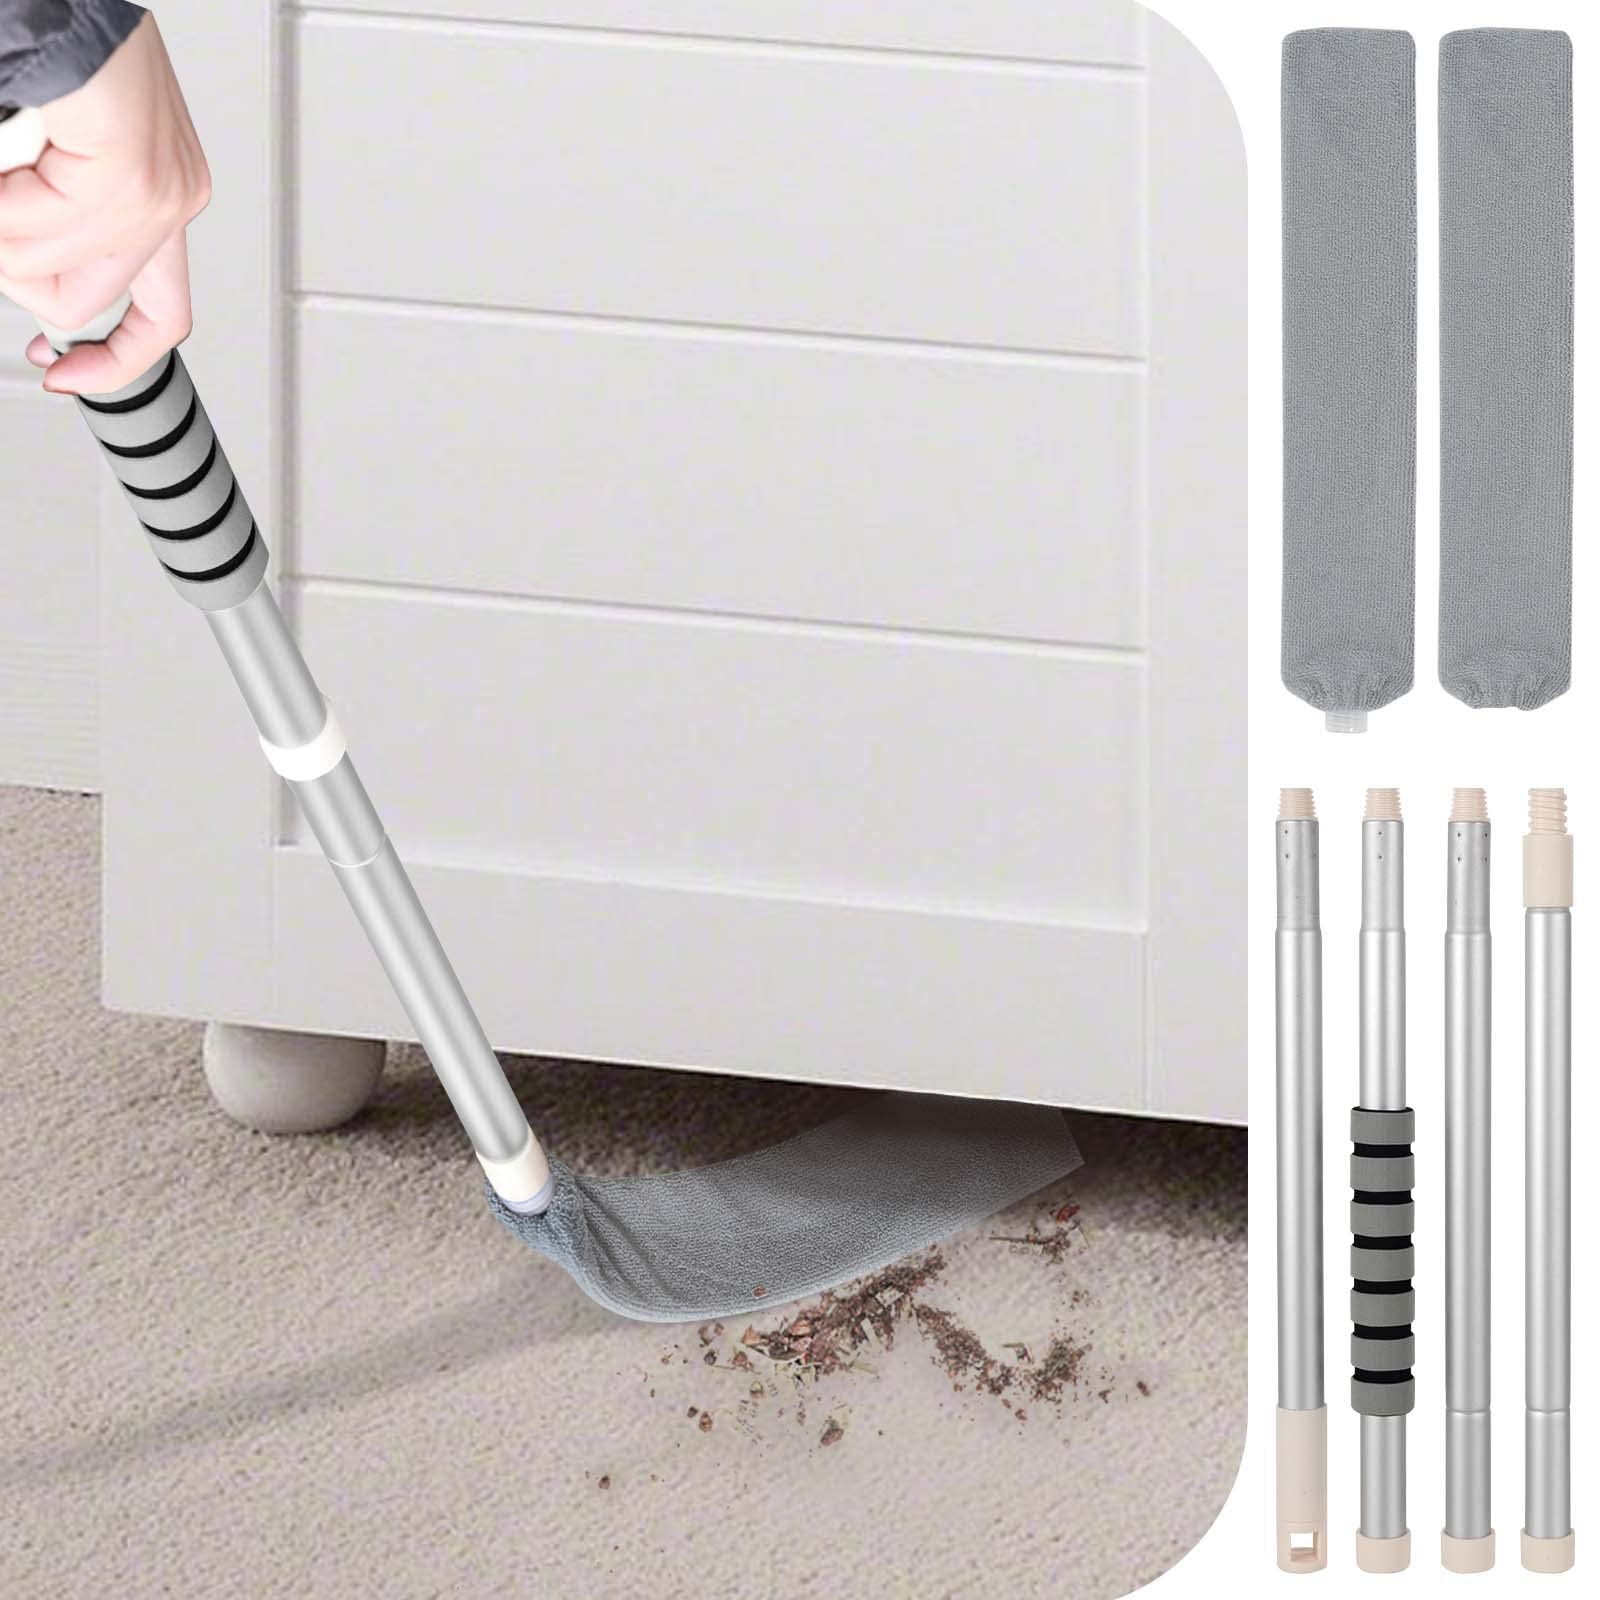 Home Portable Detachable Stove Fridge Household Washable Reusable Dust Brush  Under Appliances Cleaning Tool Long Handle Mop - AliExpress